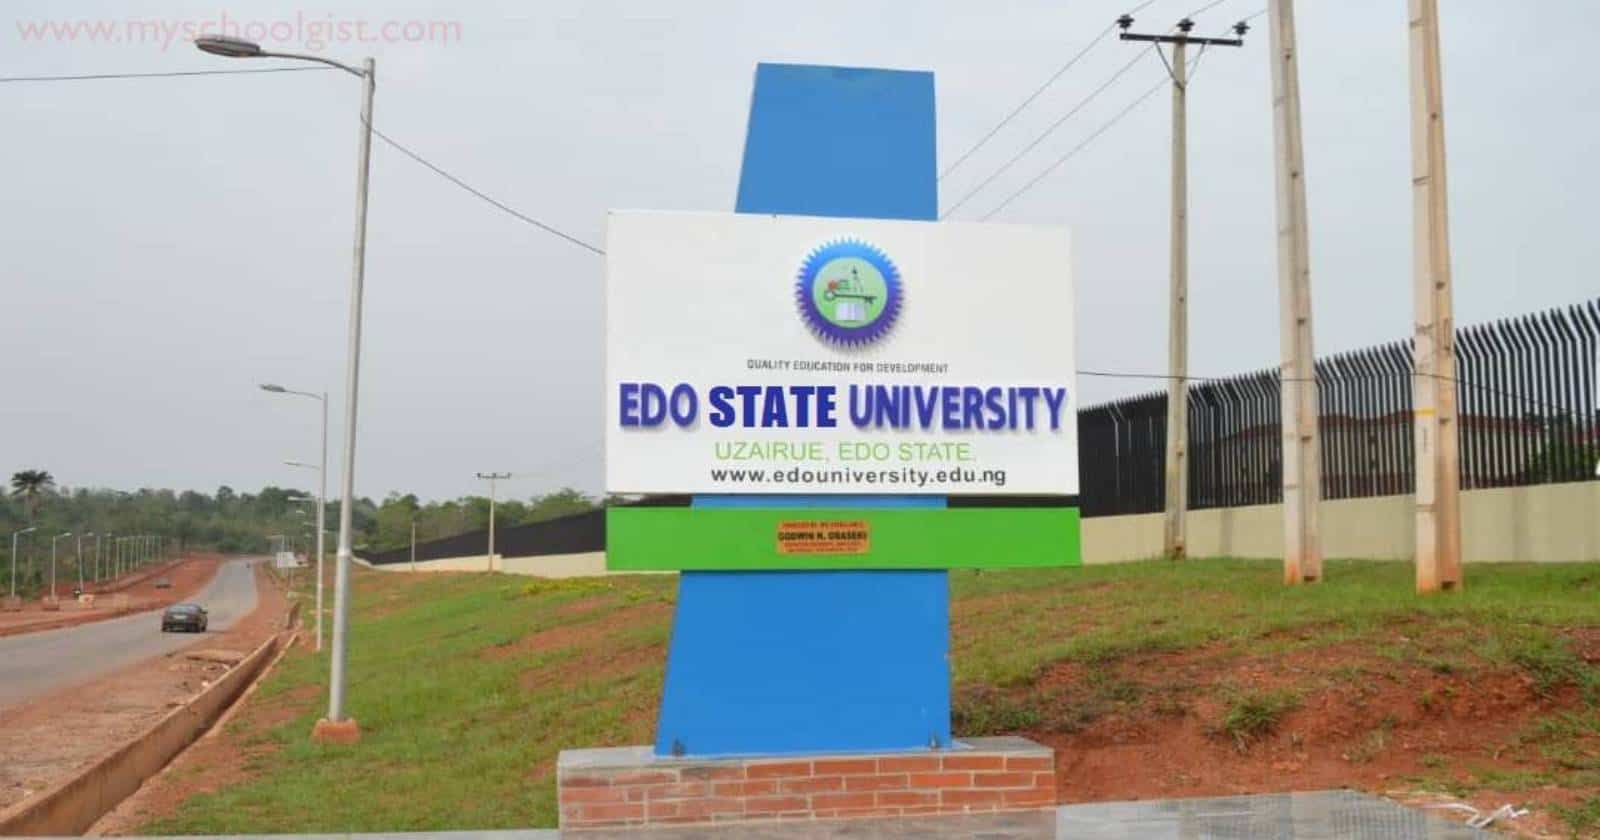 Edo State University (EDSU) Academic Calendar